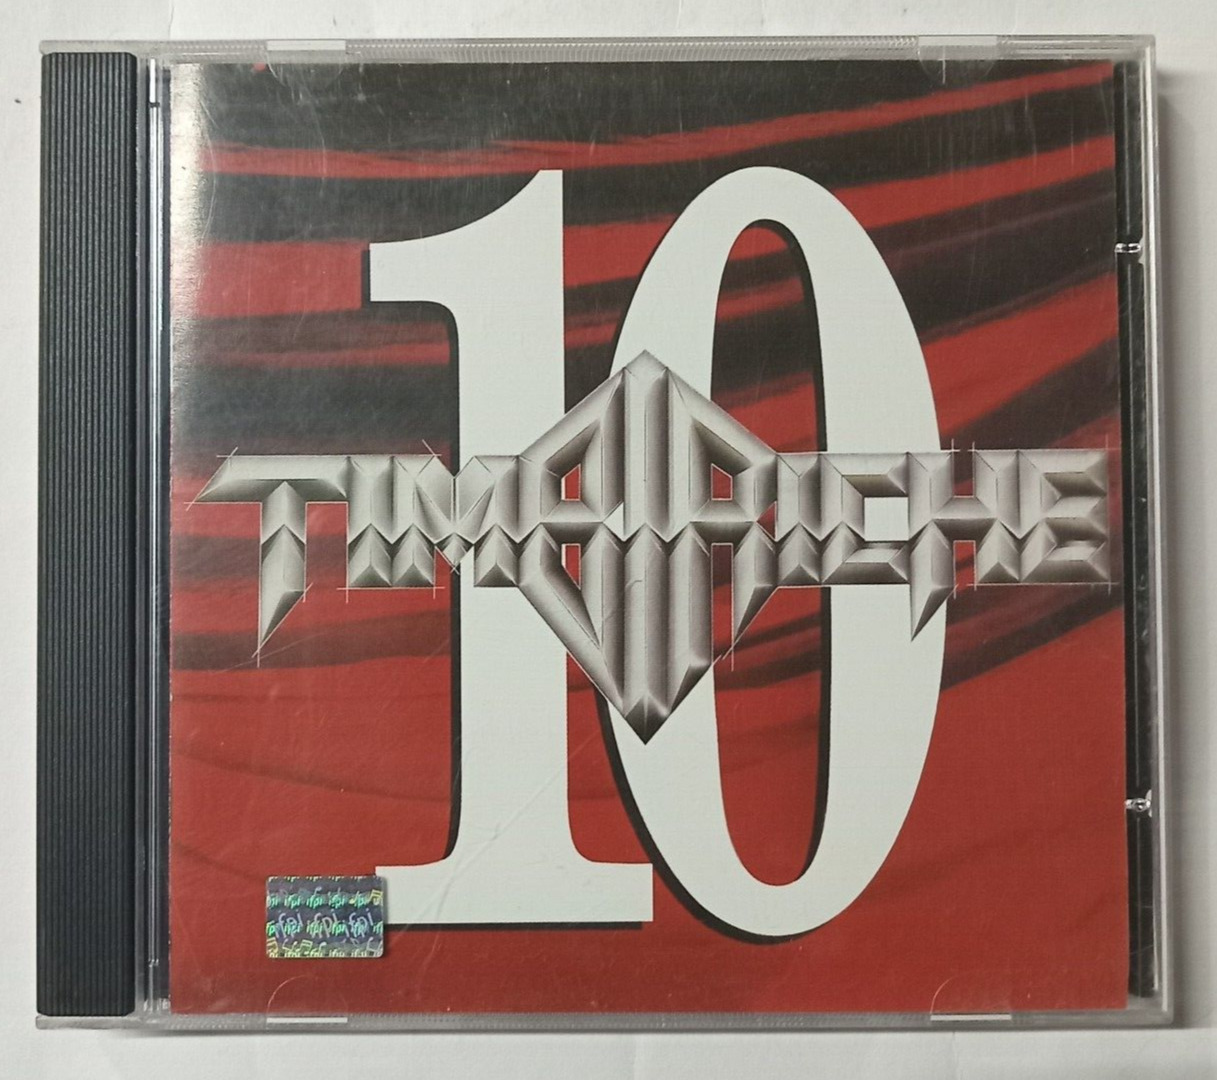 TIMBIRICHE - 10 - 2009 MEXICAN CD ALBUM, LATIN POP